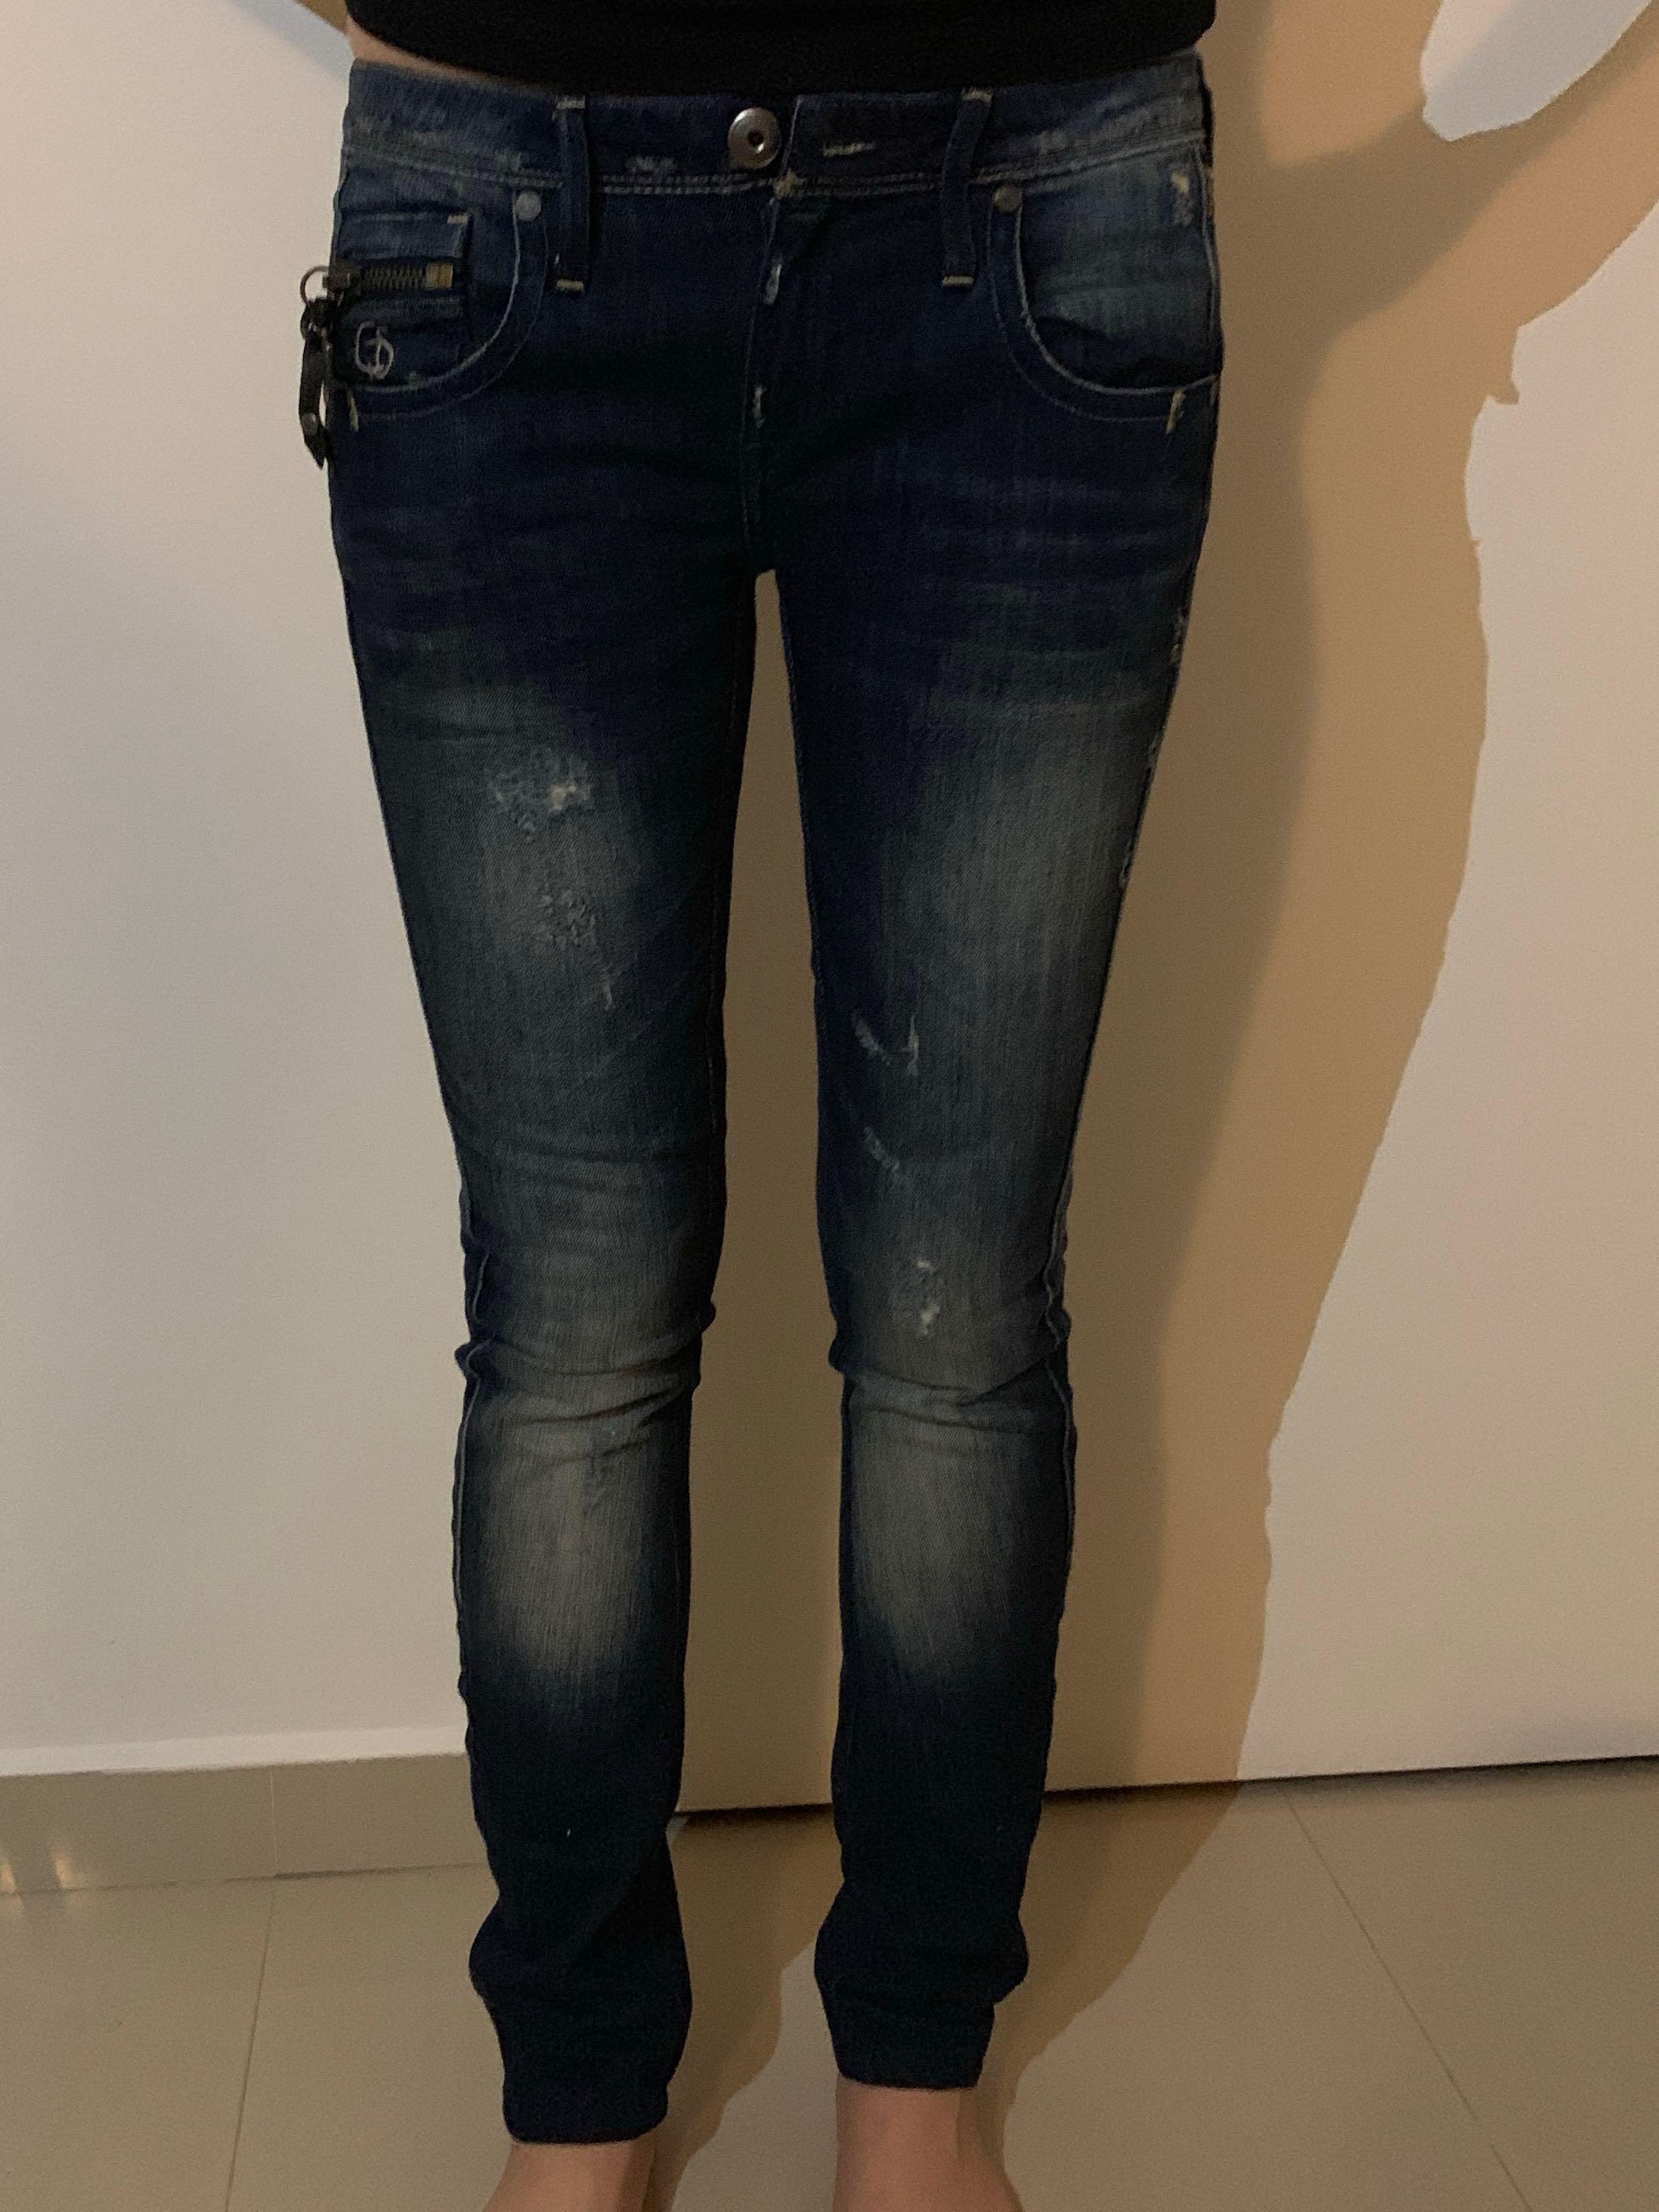 g star jeans 2019